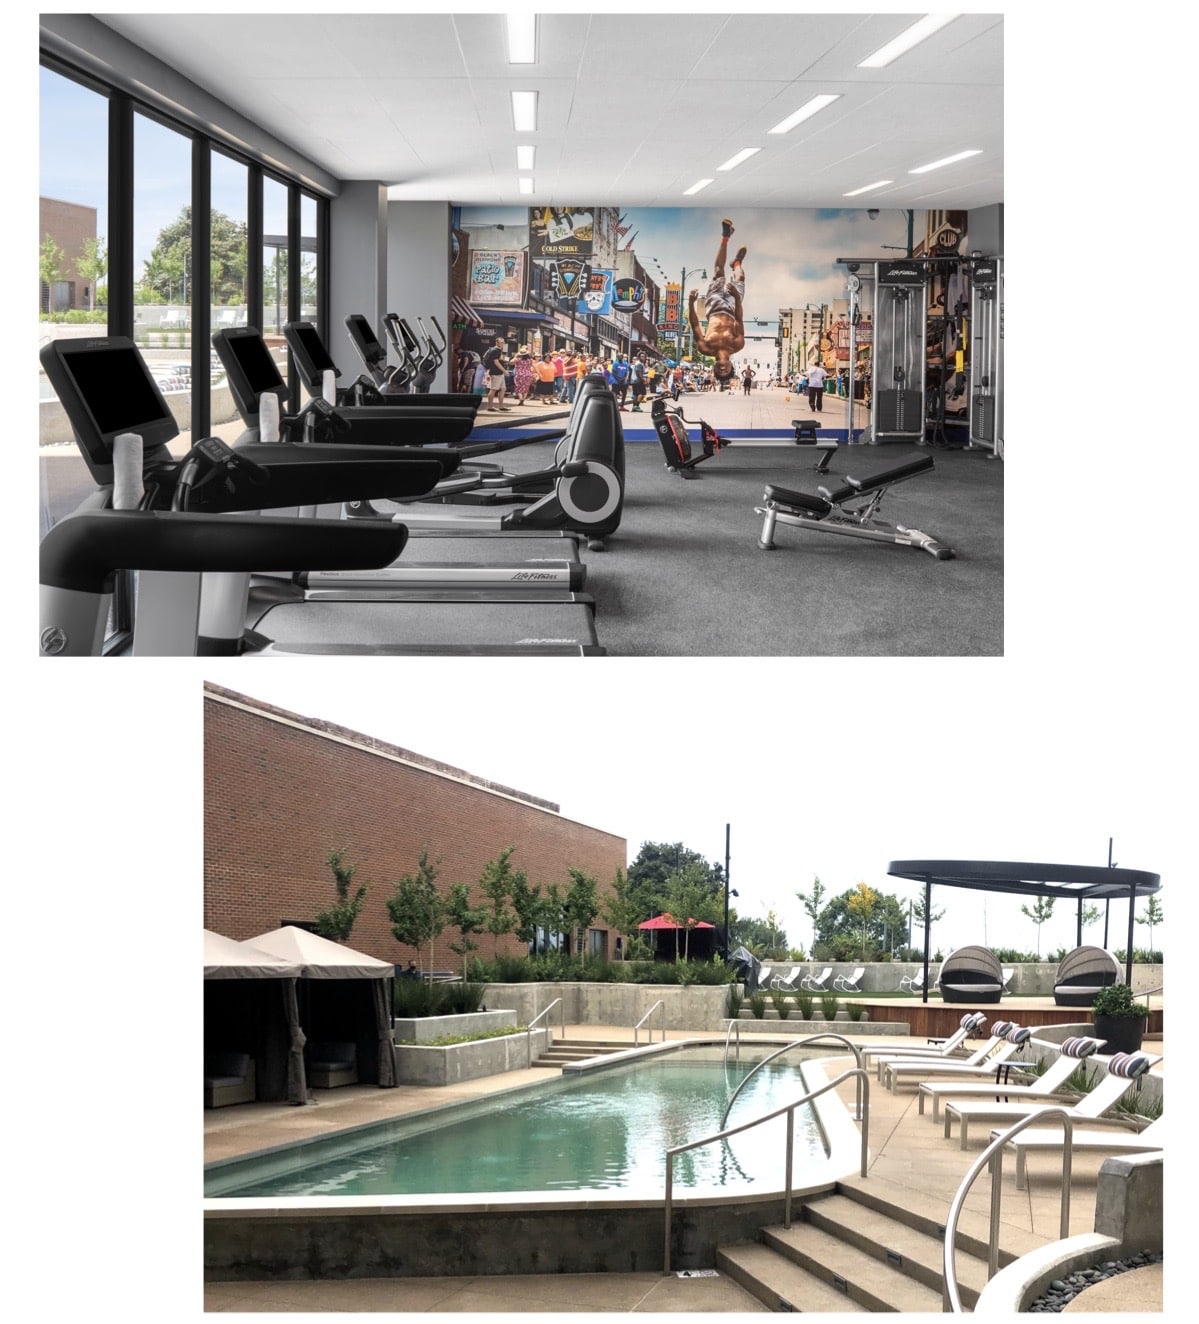 Hyatt hotel gym and pool staycation